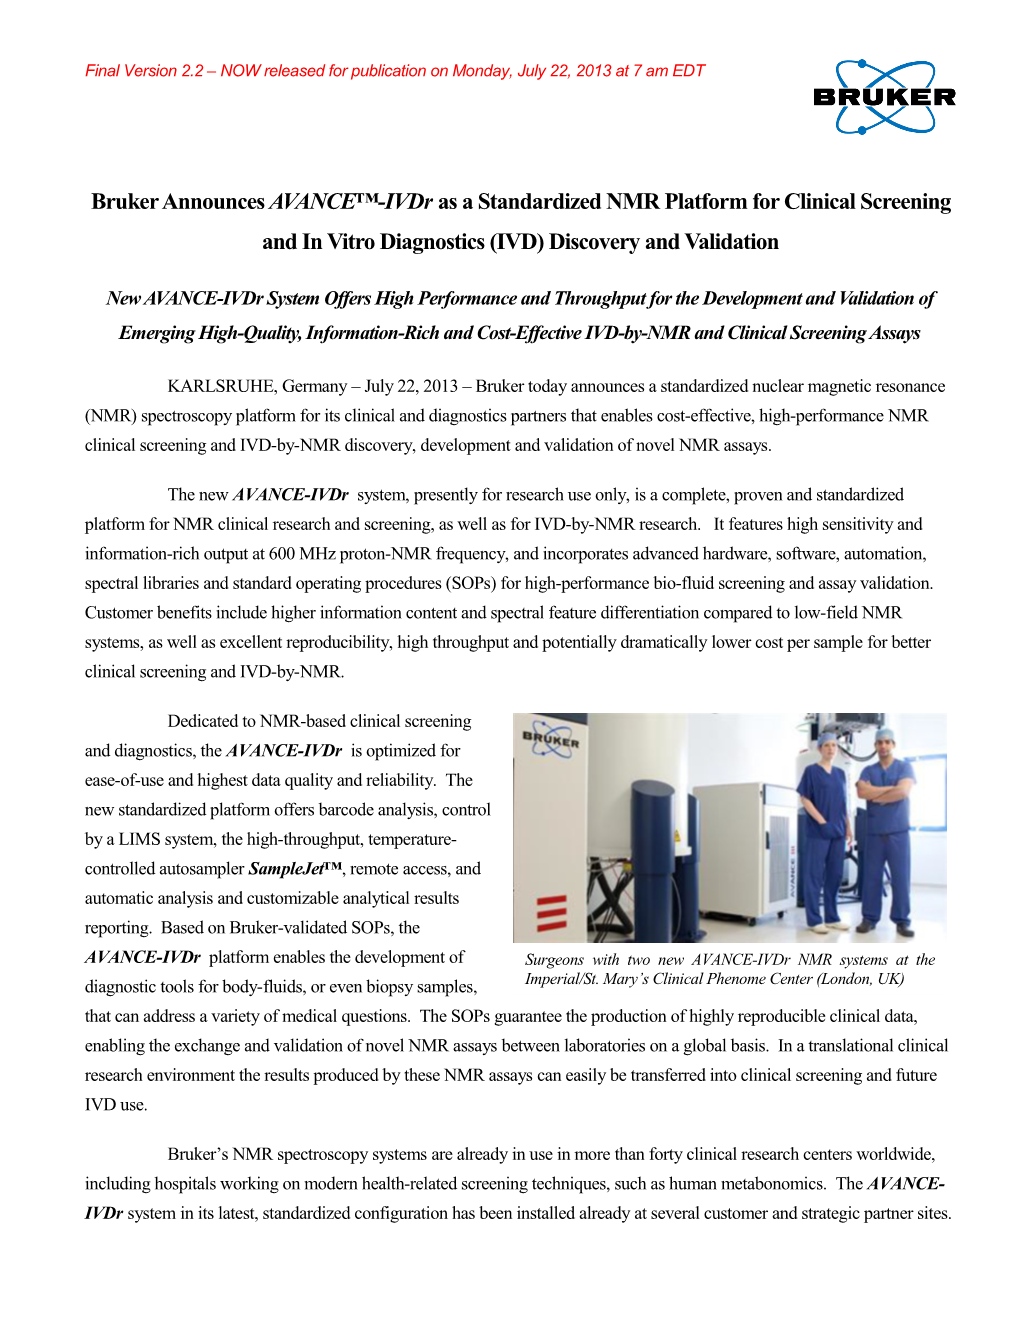 Bruker Announces AVANCE -Ivdras a Standardized NMR Platform for Clinical Screening And